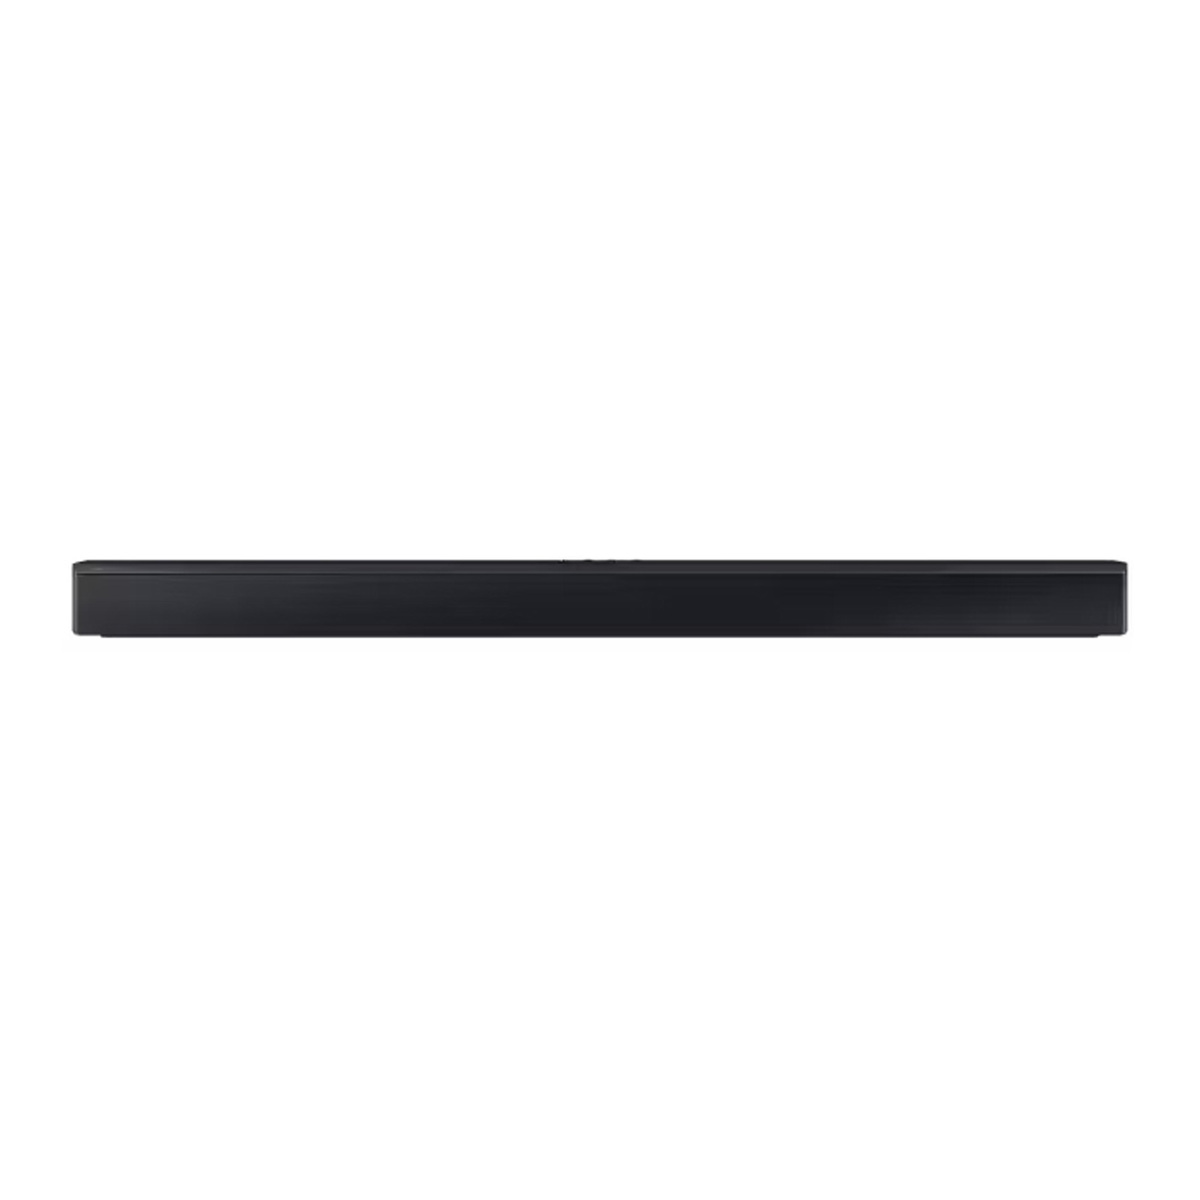 Samsung C-Series Sound Bar, 2.1Ch, Black, HW-C450/ZN